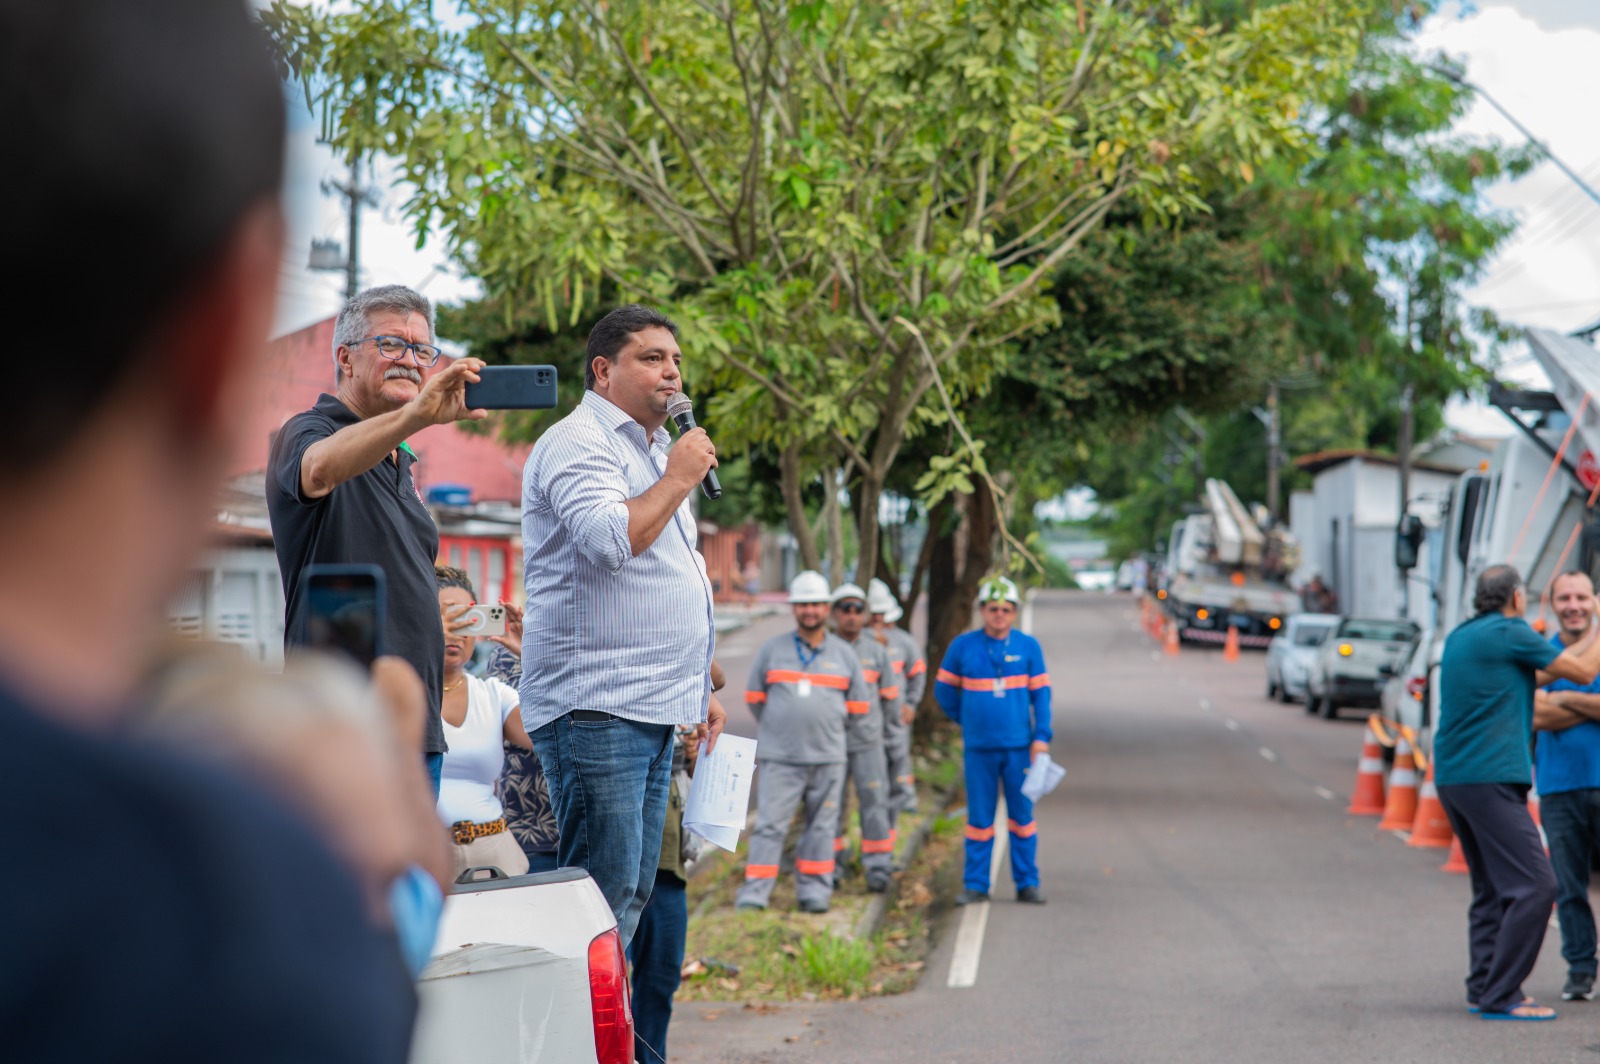 No Dom Pedro, Caio André se une a moradores contra medidores aéreos